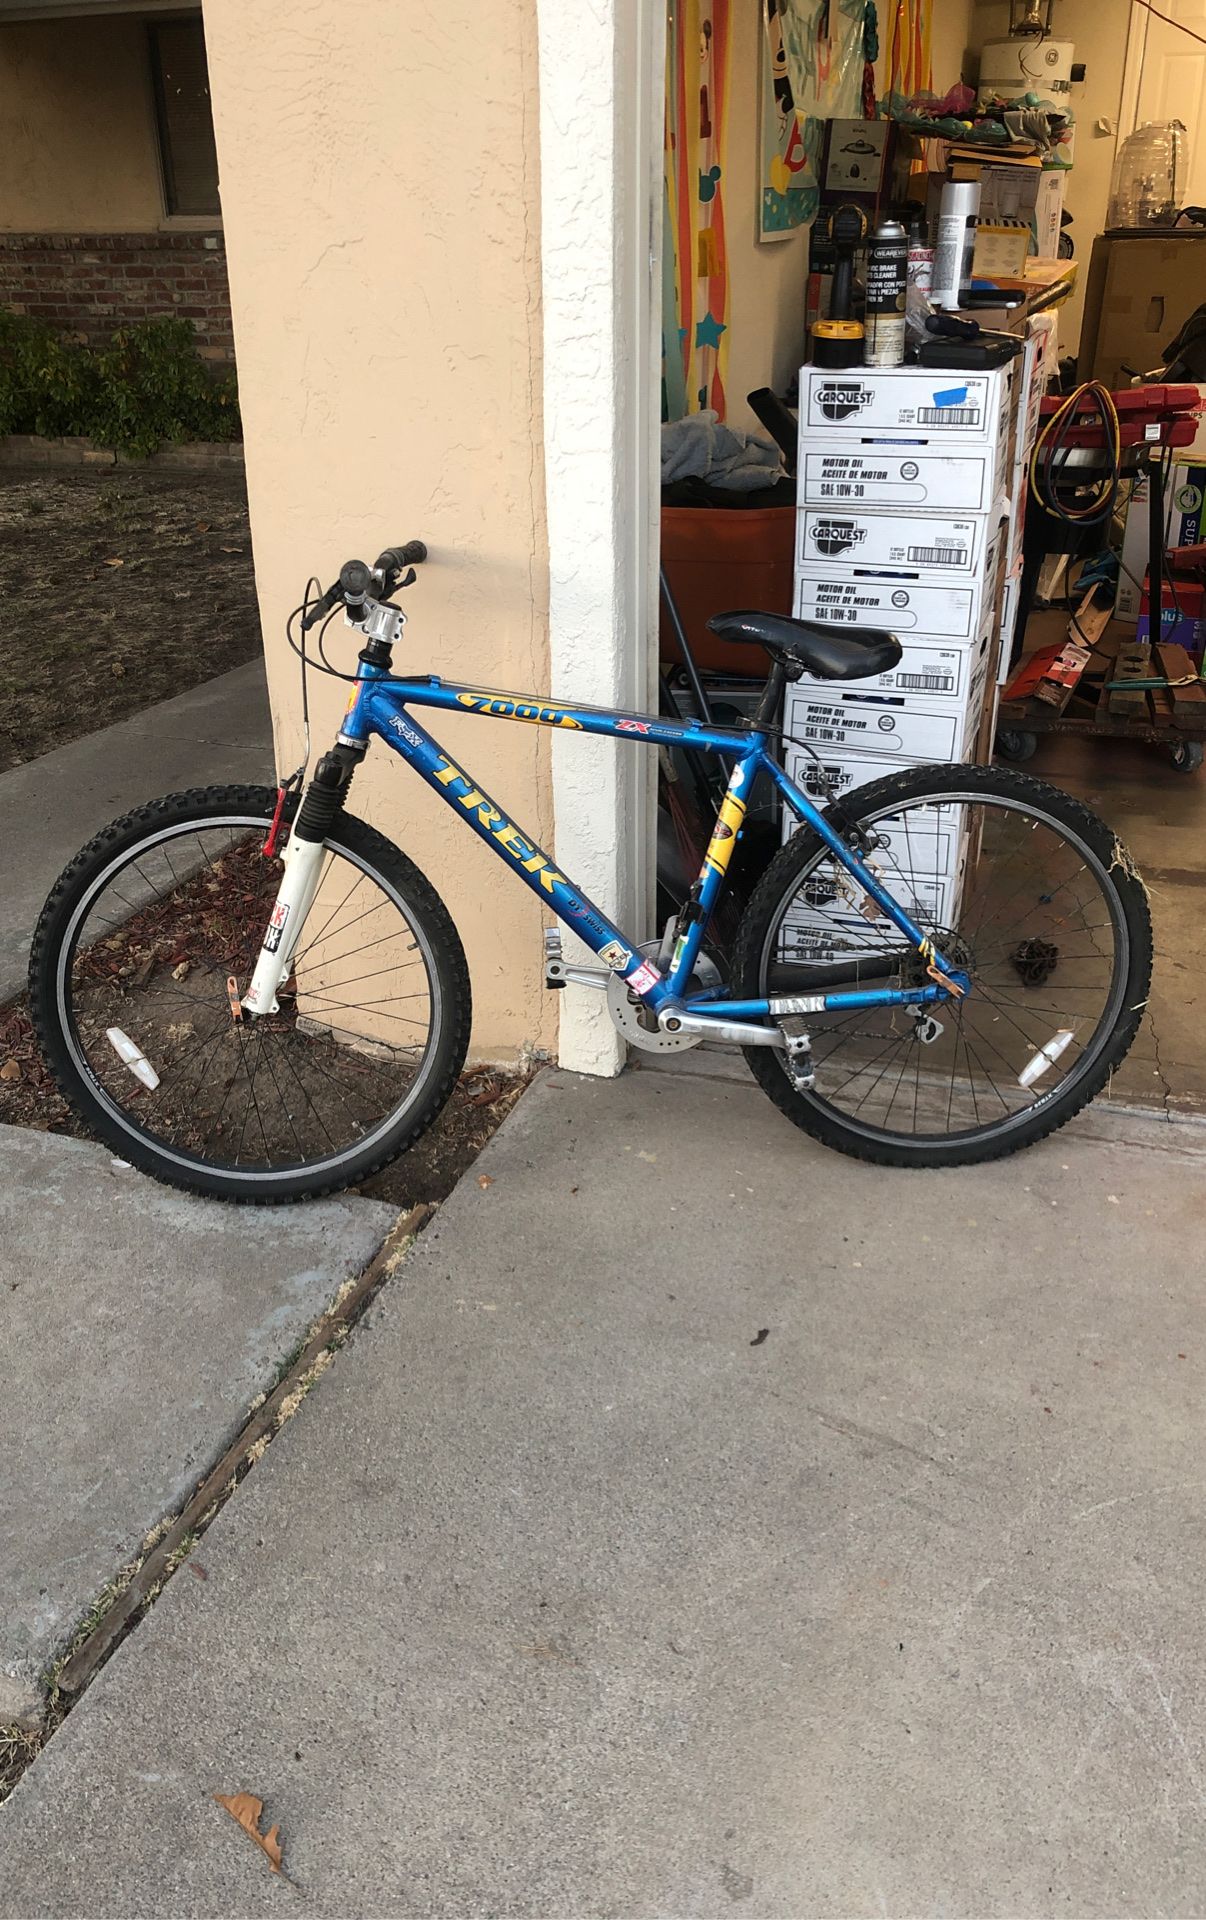 Trek mountain bike $100